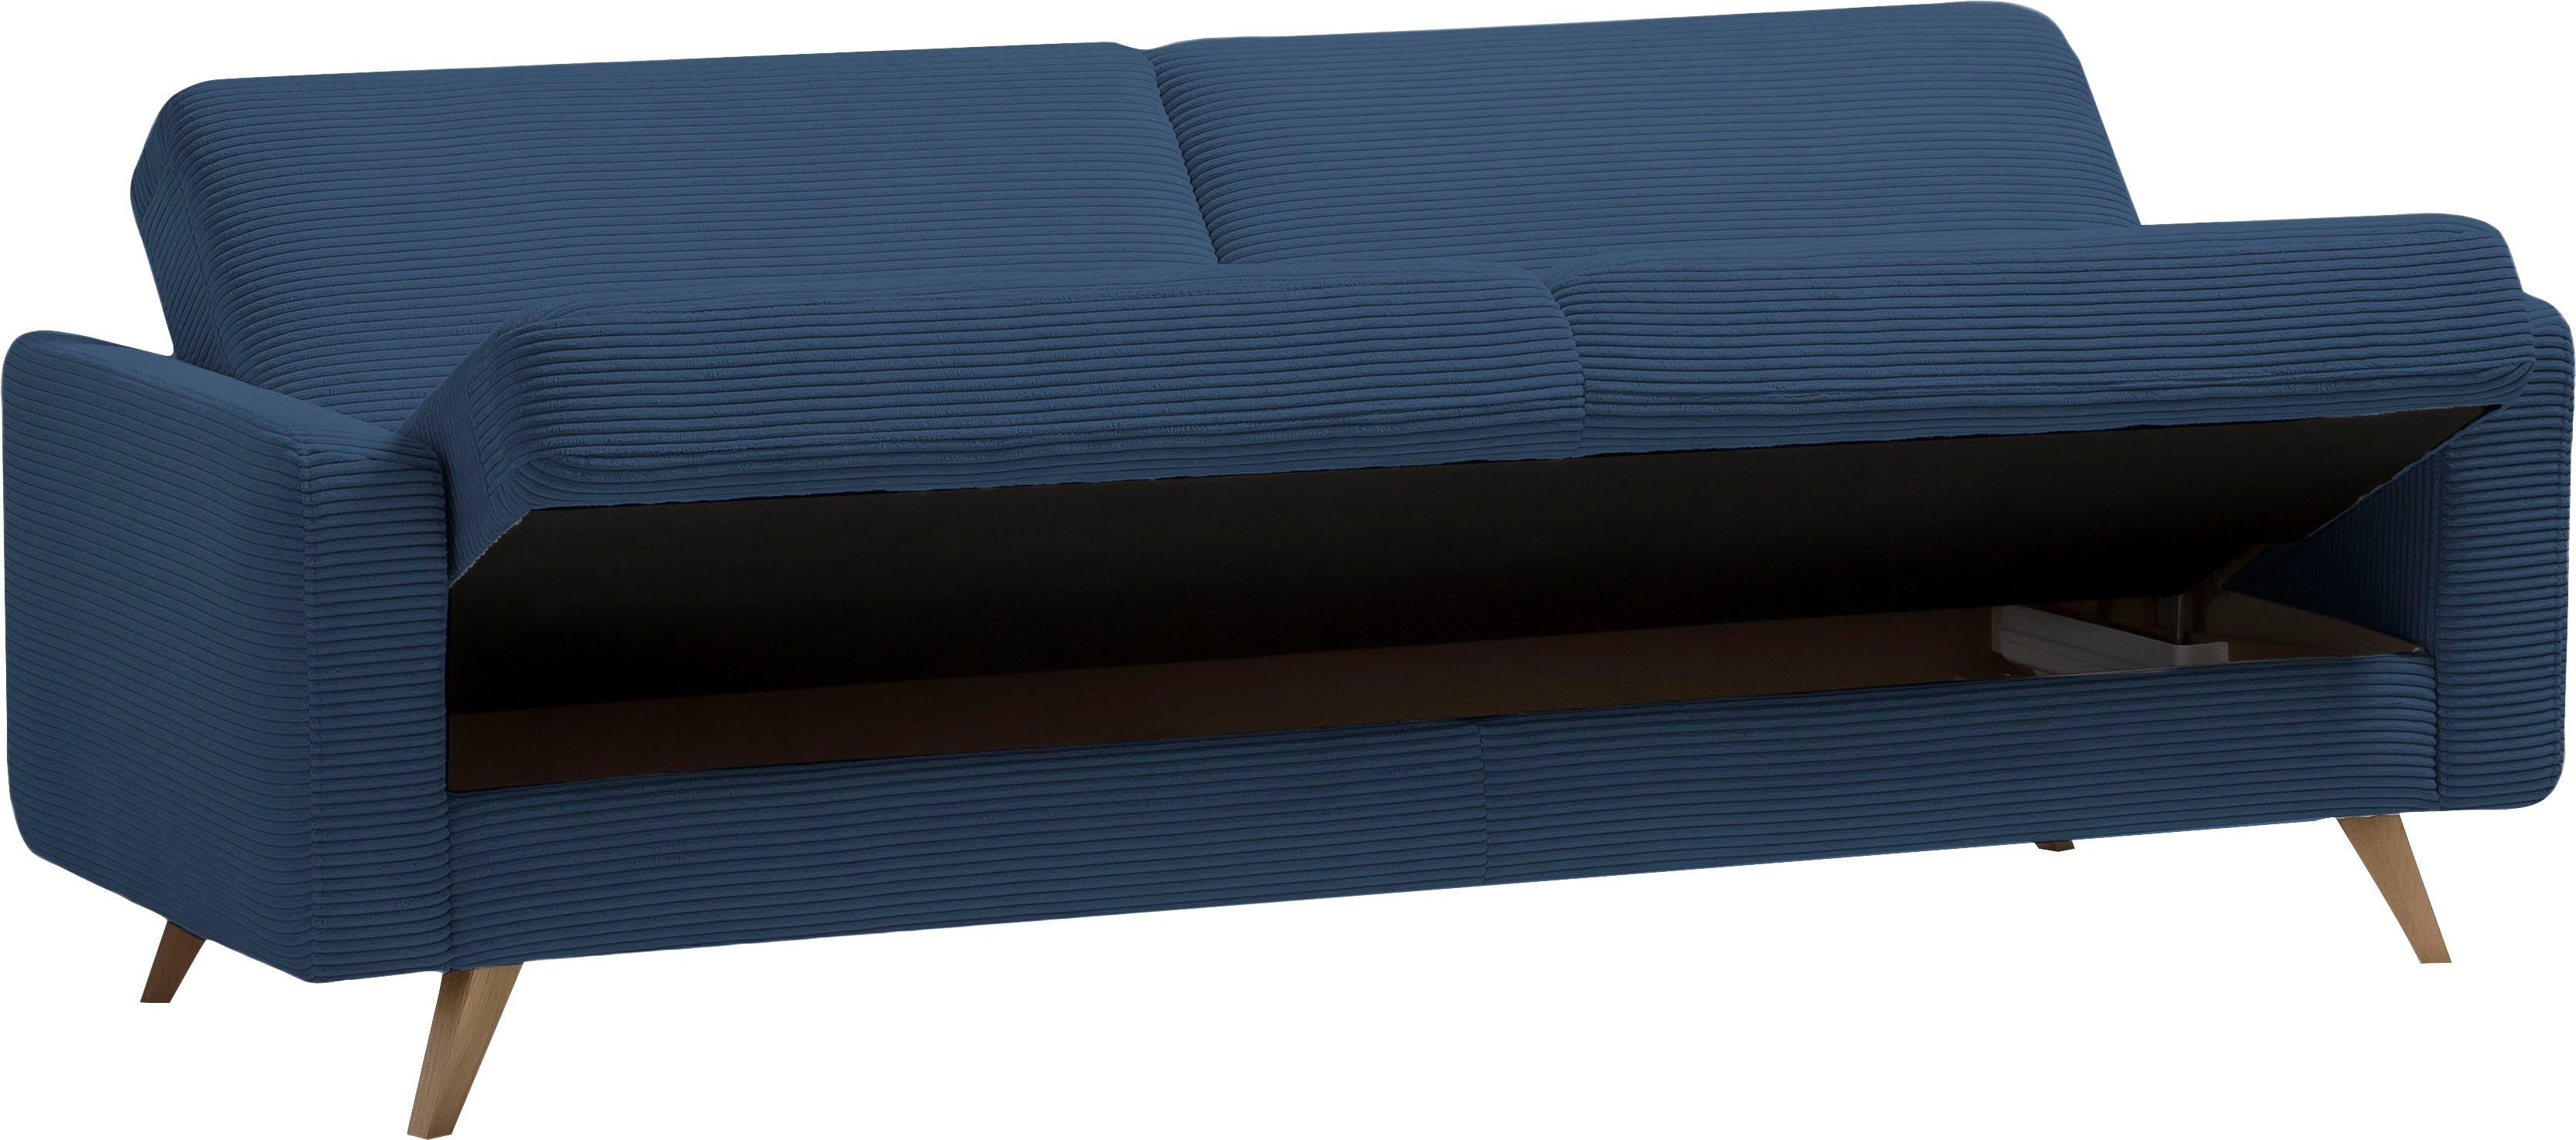 exxpo - 3-Sitzer Samso, navy Bettkasten Inklusive sofa fashion Bettfunktion und